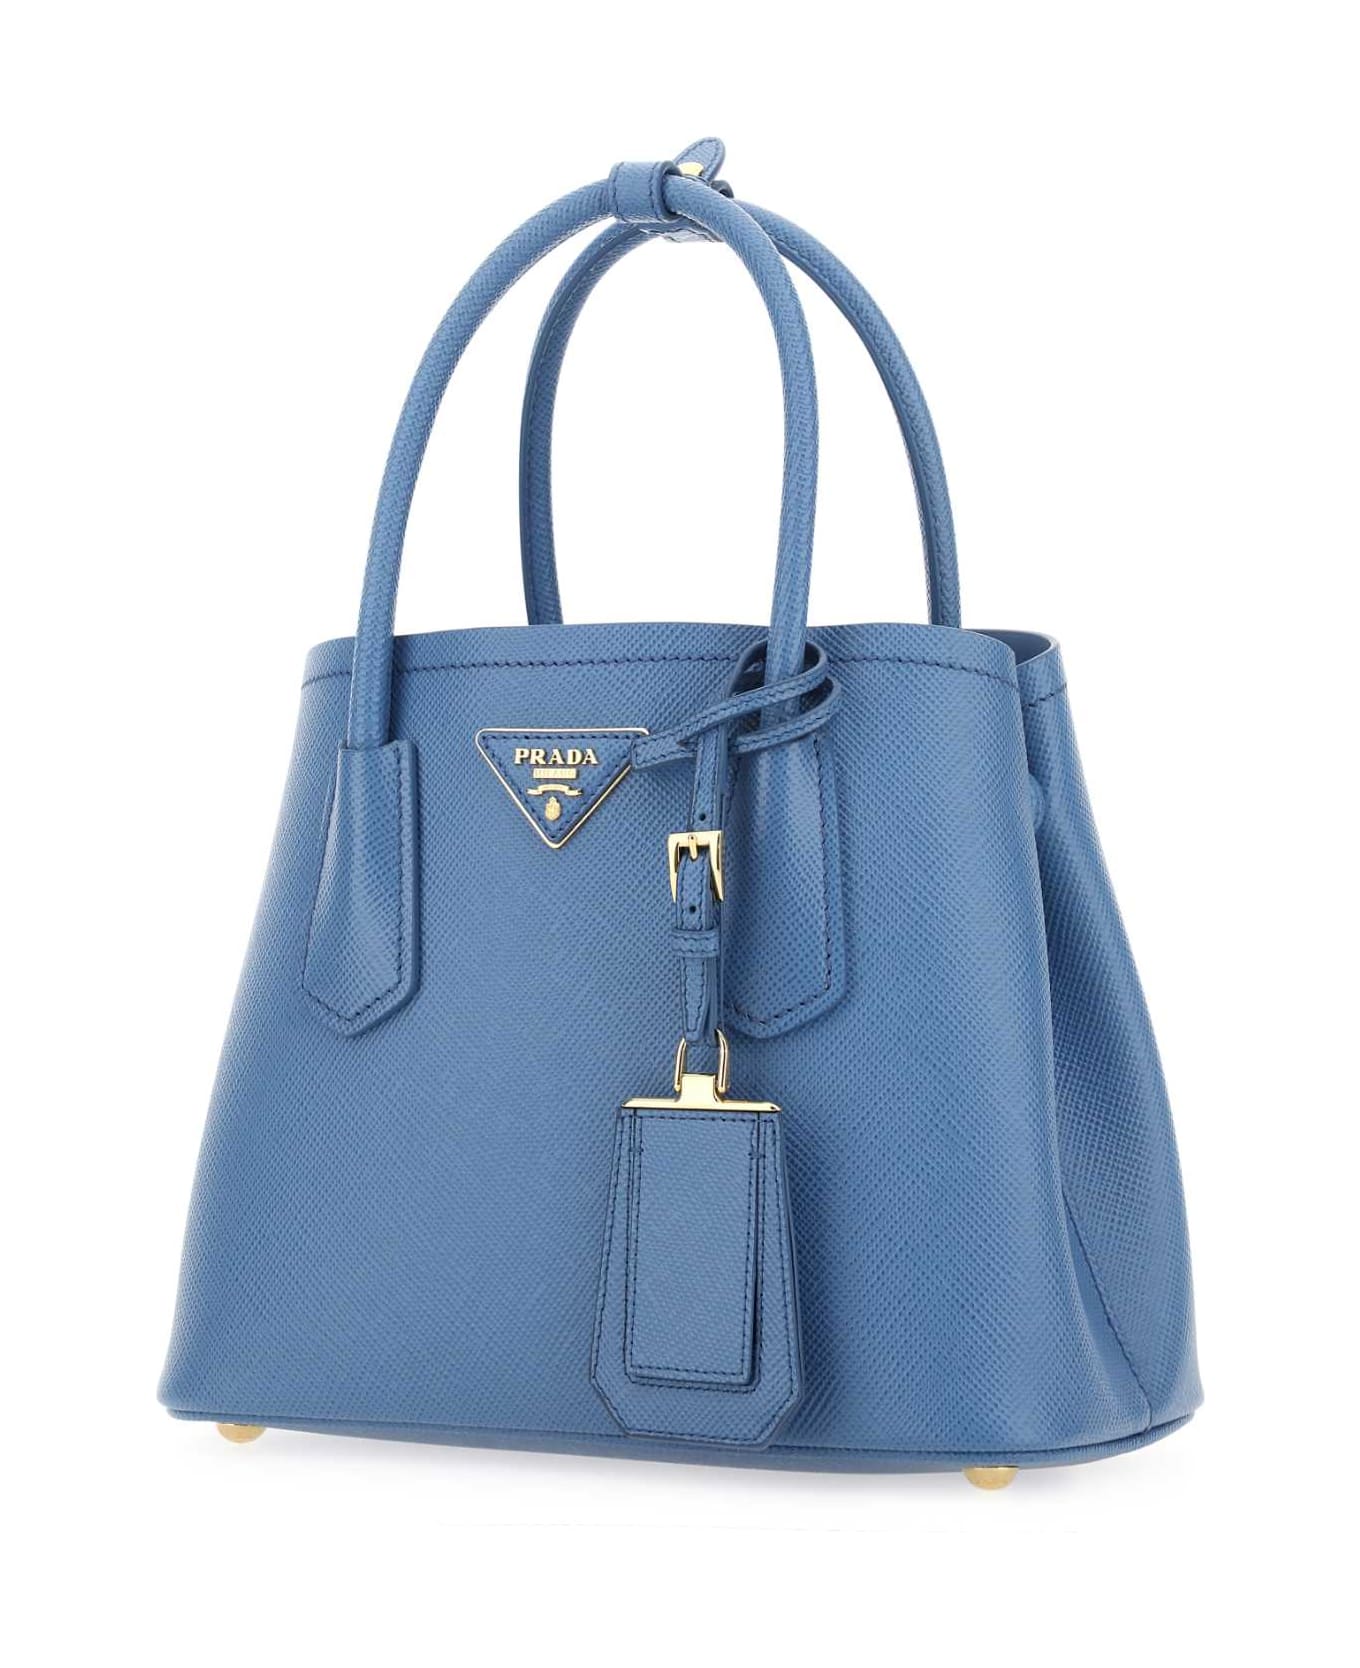 Prada Cerulean Blue Leather Handbag - Blue